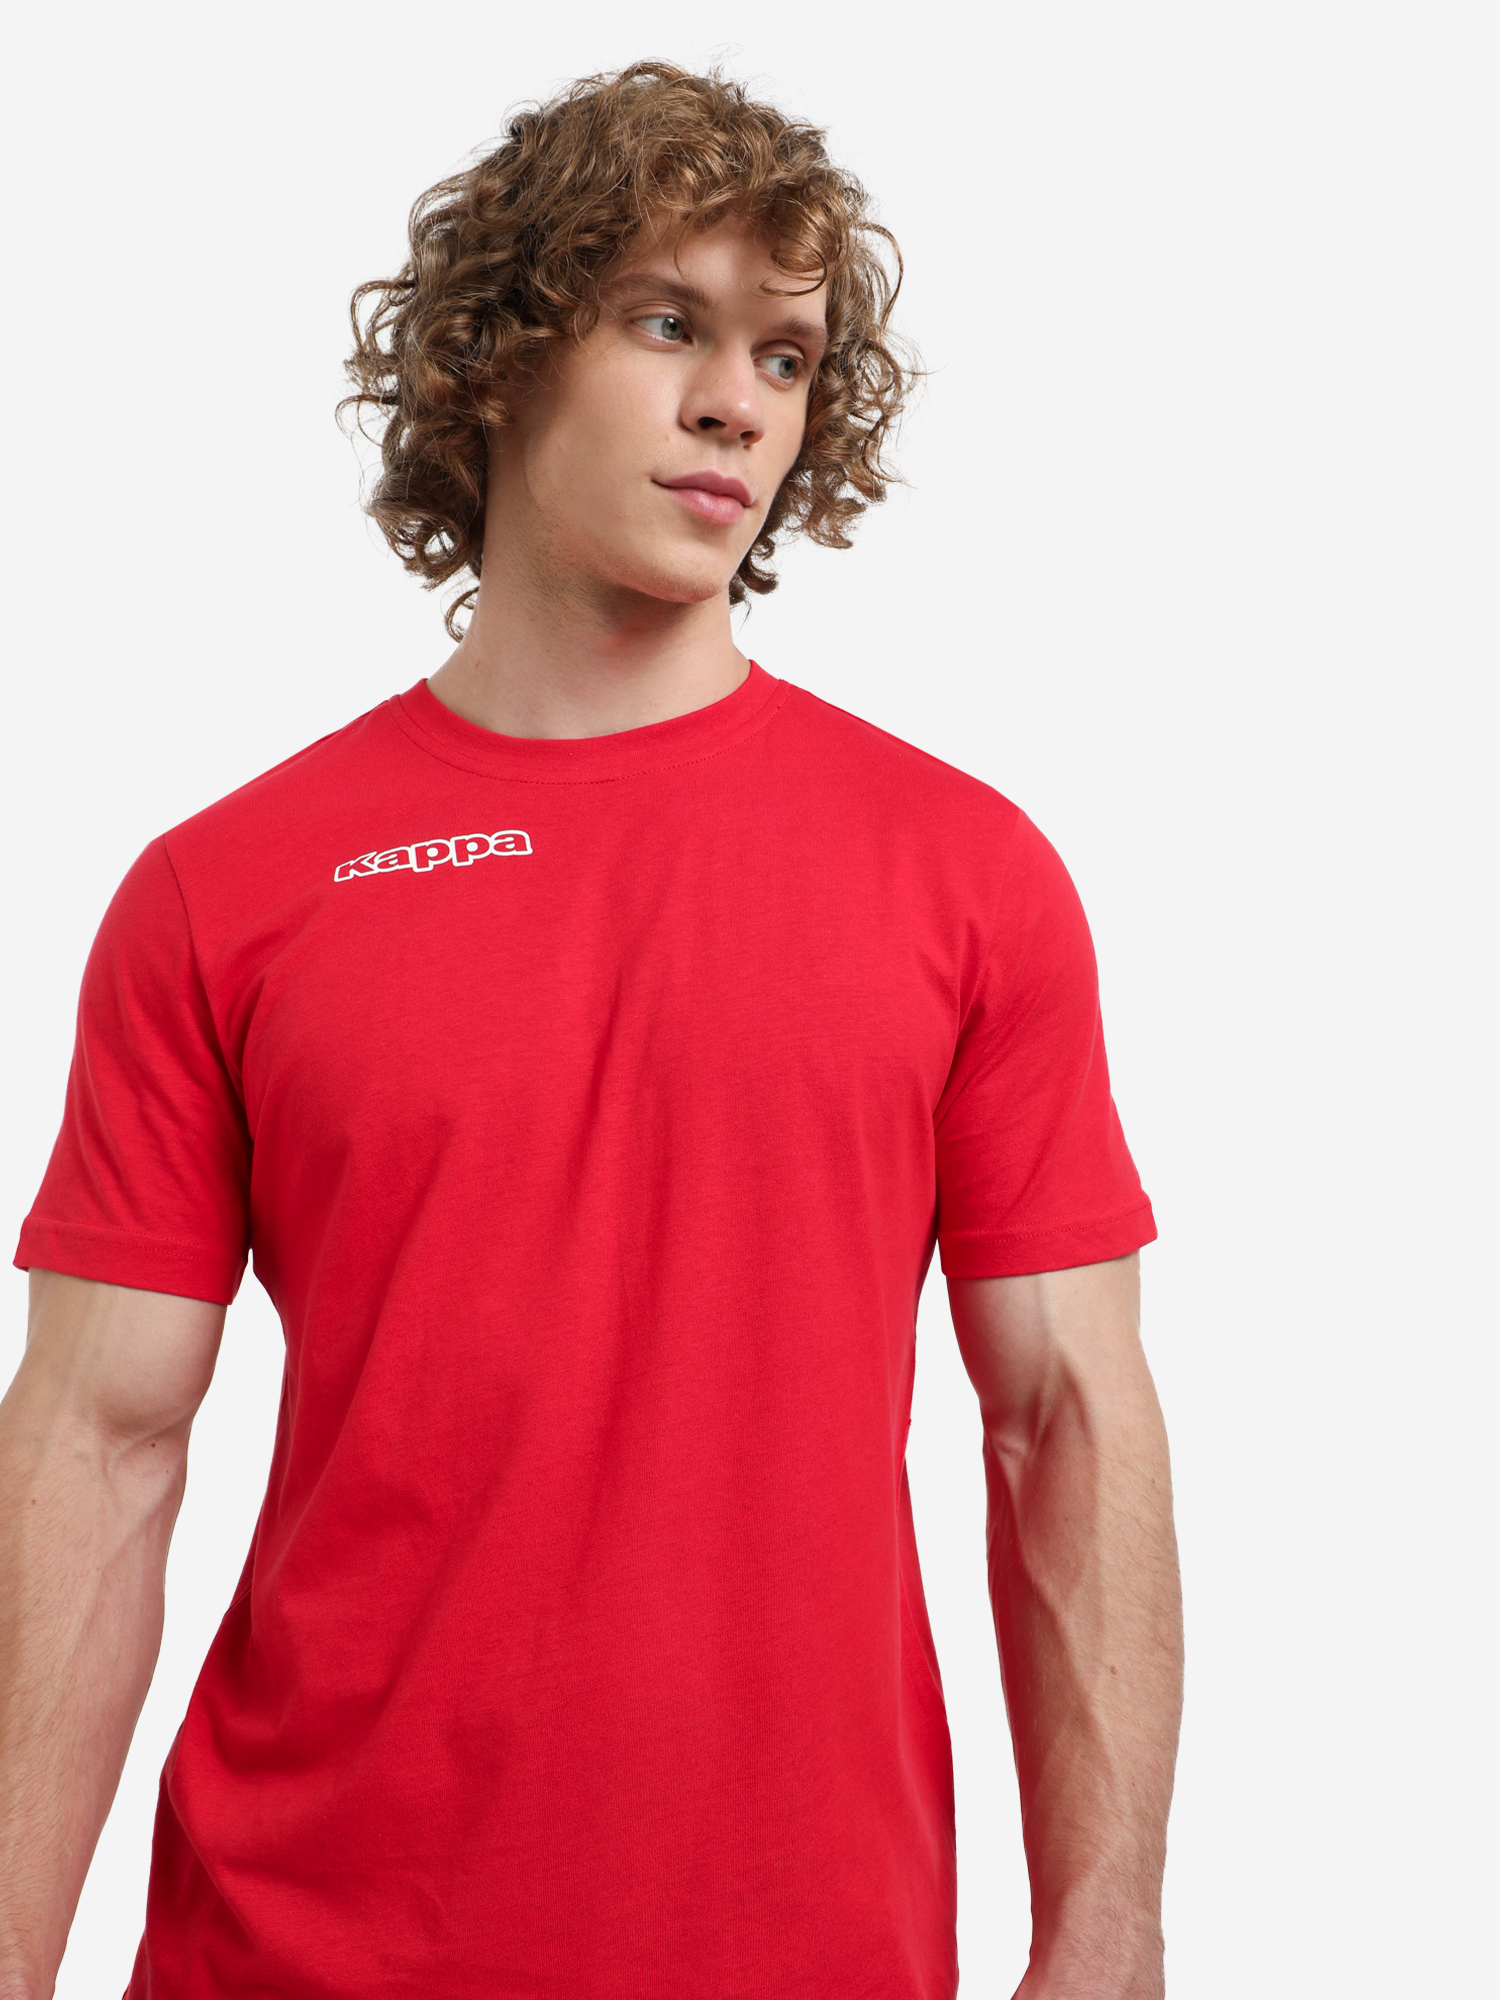 Футболка мужская Kappa, Красный футболка мужская gsd красный